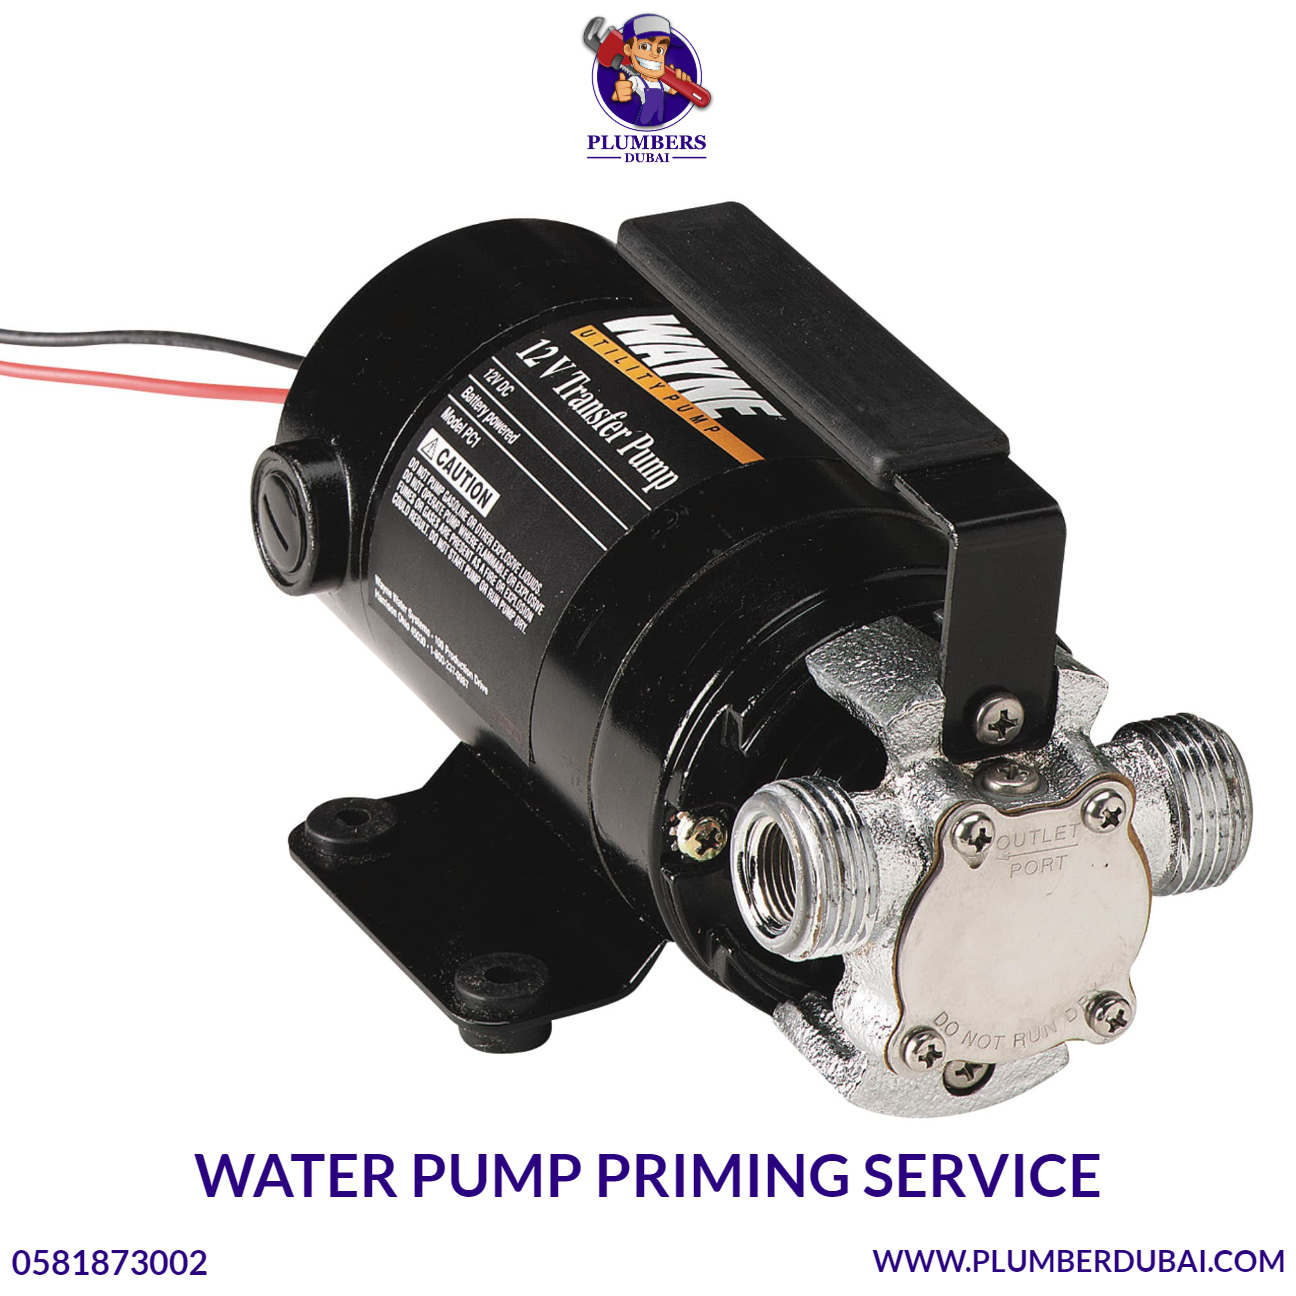 Water Pump Priming Service